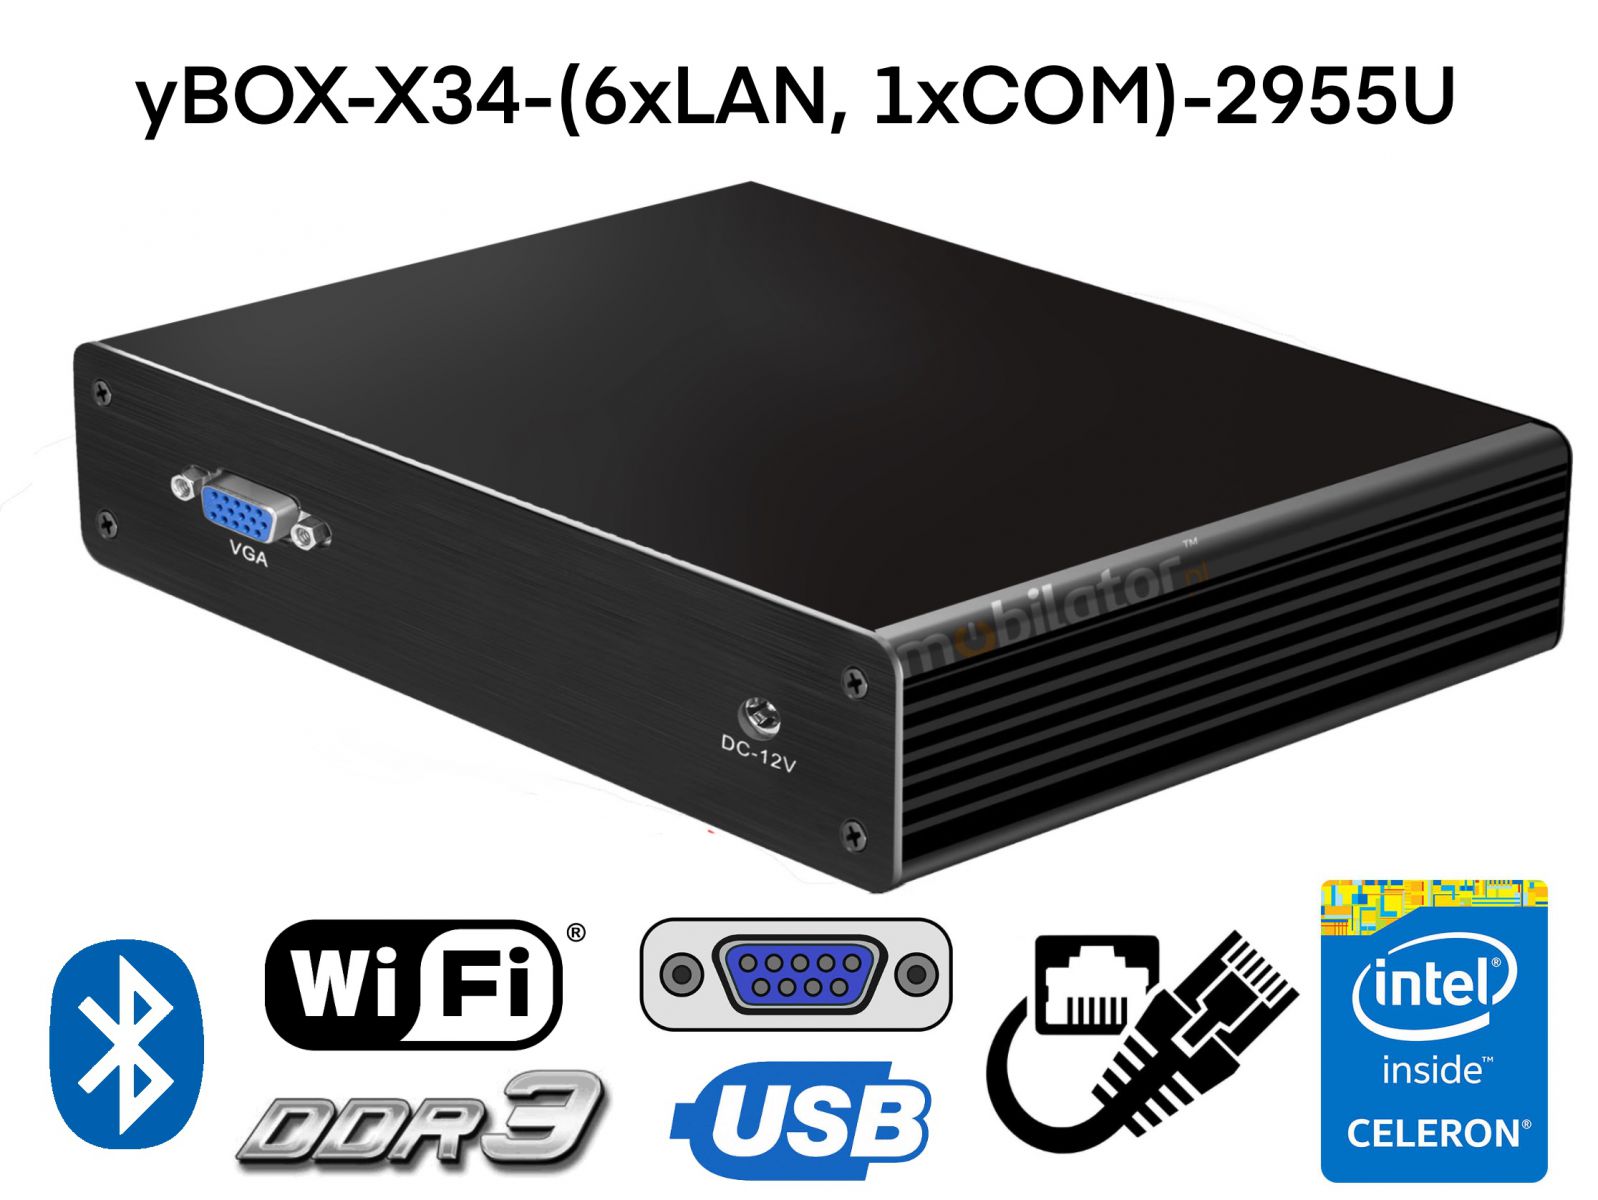 6xLAN Industrial Fanless PC for office, 8GB RAM, 128GB SSD, Bluetooth, MiniPC yBOX-X34-(6xLAN, 1xCOM)-2955U v. 3